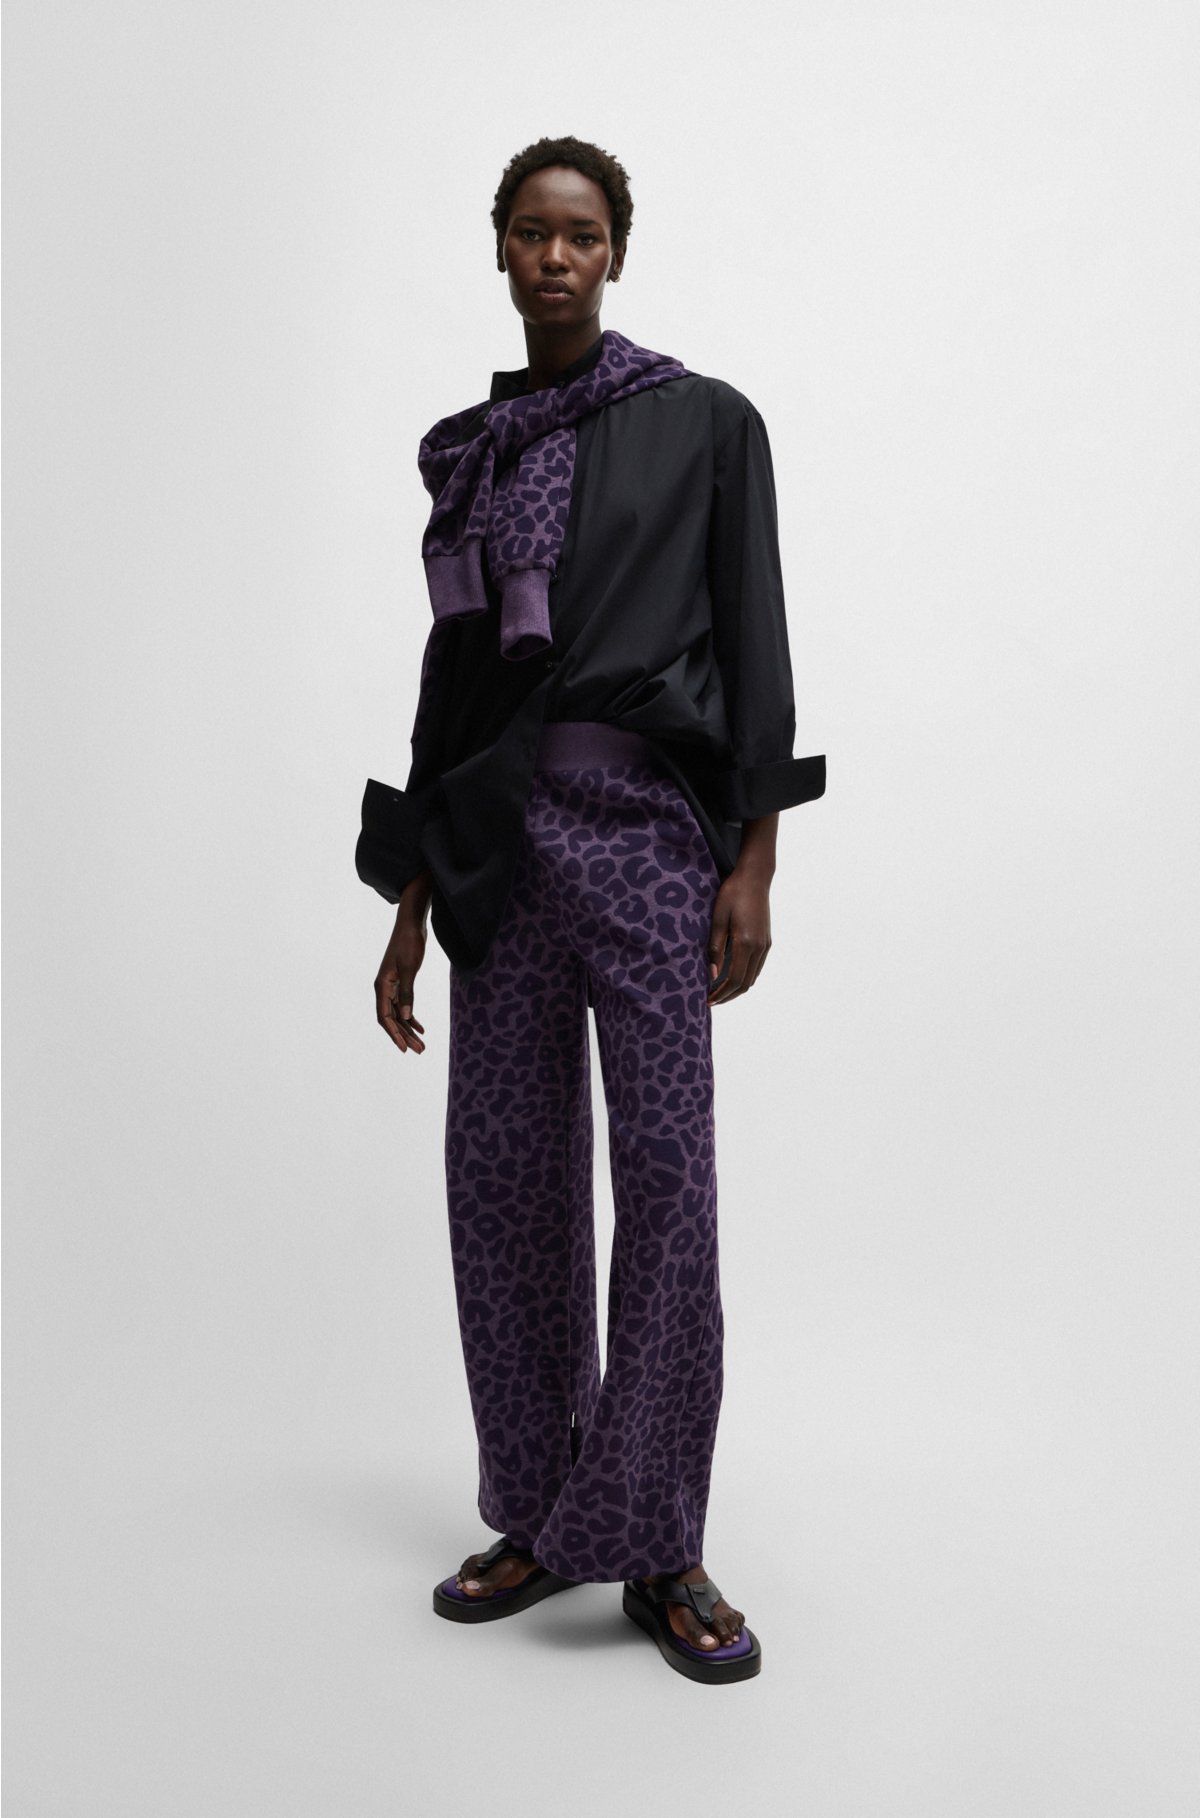 NAOMI x BOSS cotton-blend tracksuit bottoms with leopard print, Dark Purple